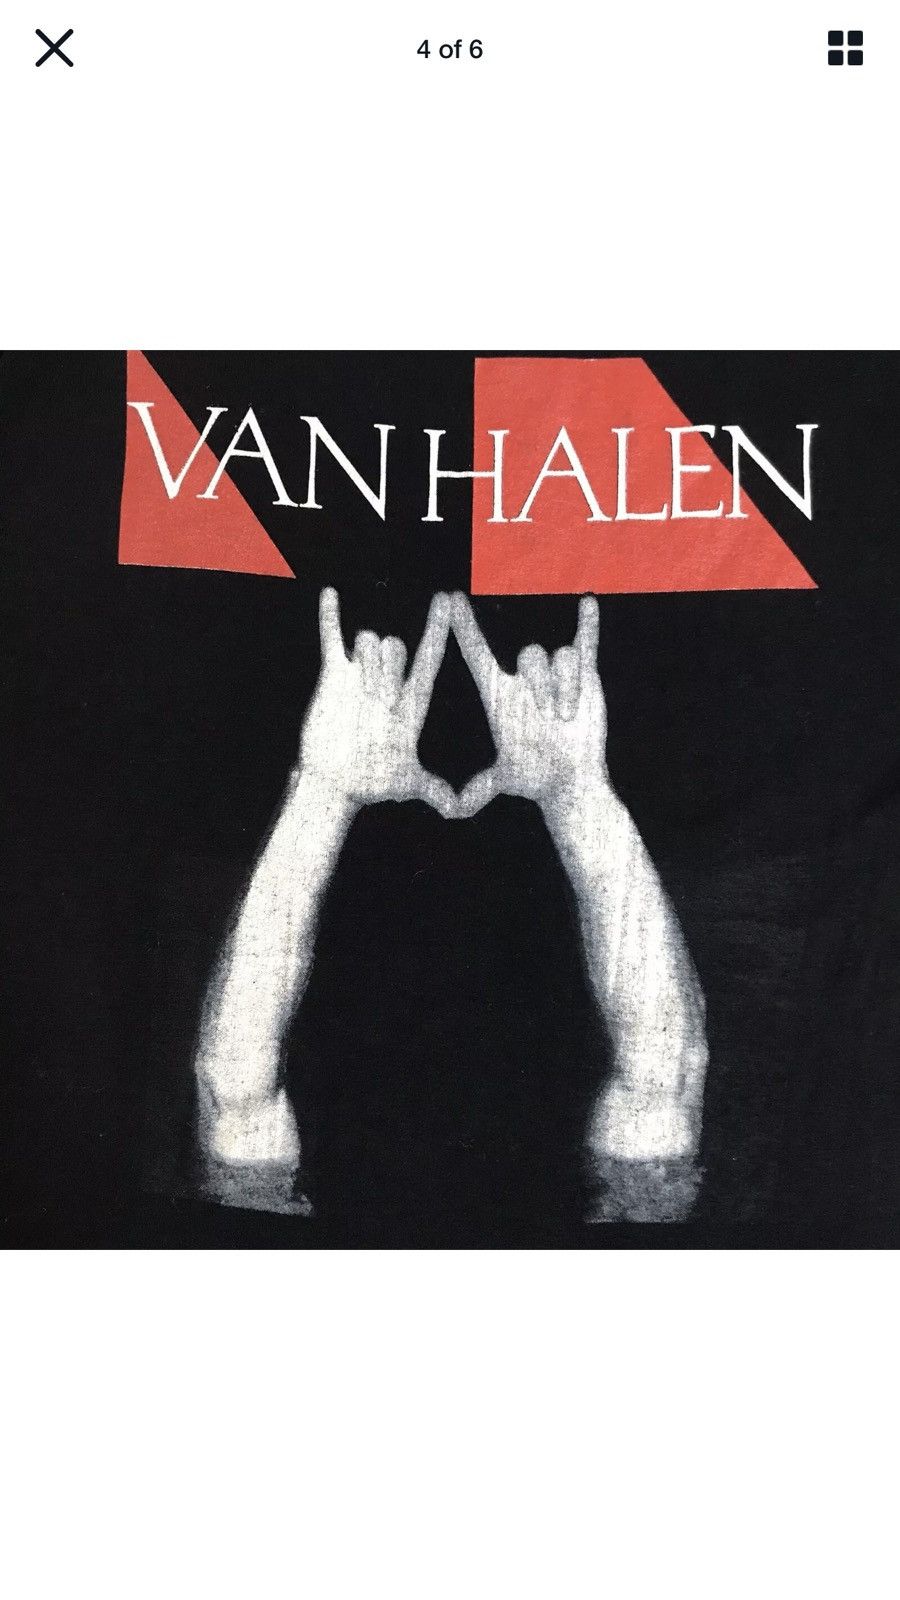 Vintage Van Halen OU812 Tour T Shirt 1989 Size Small Size US S / EU 44-46 / 1 - 4 Thumbnail